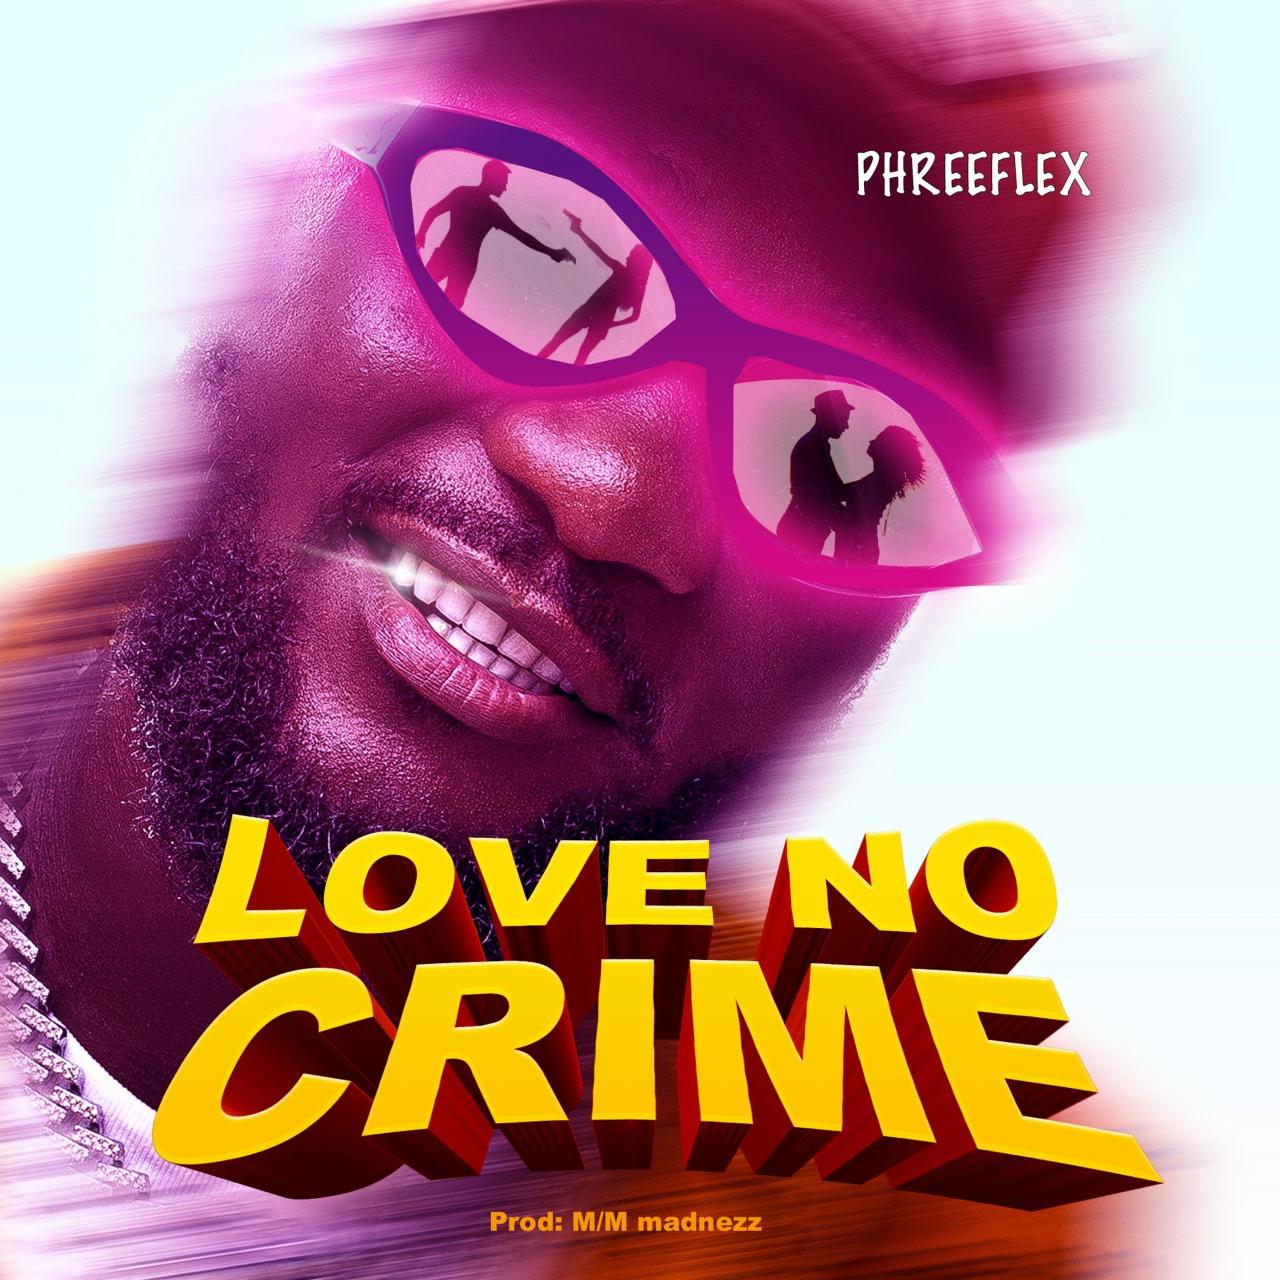 Phreeflex - Love No Crime